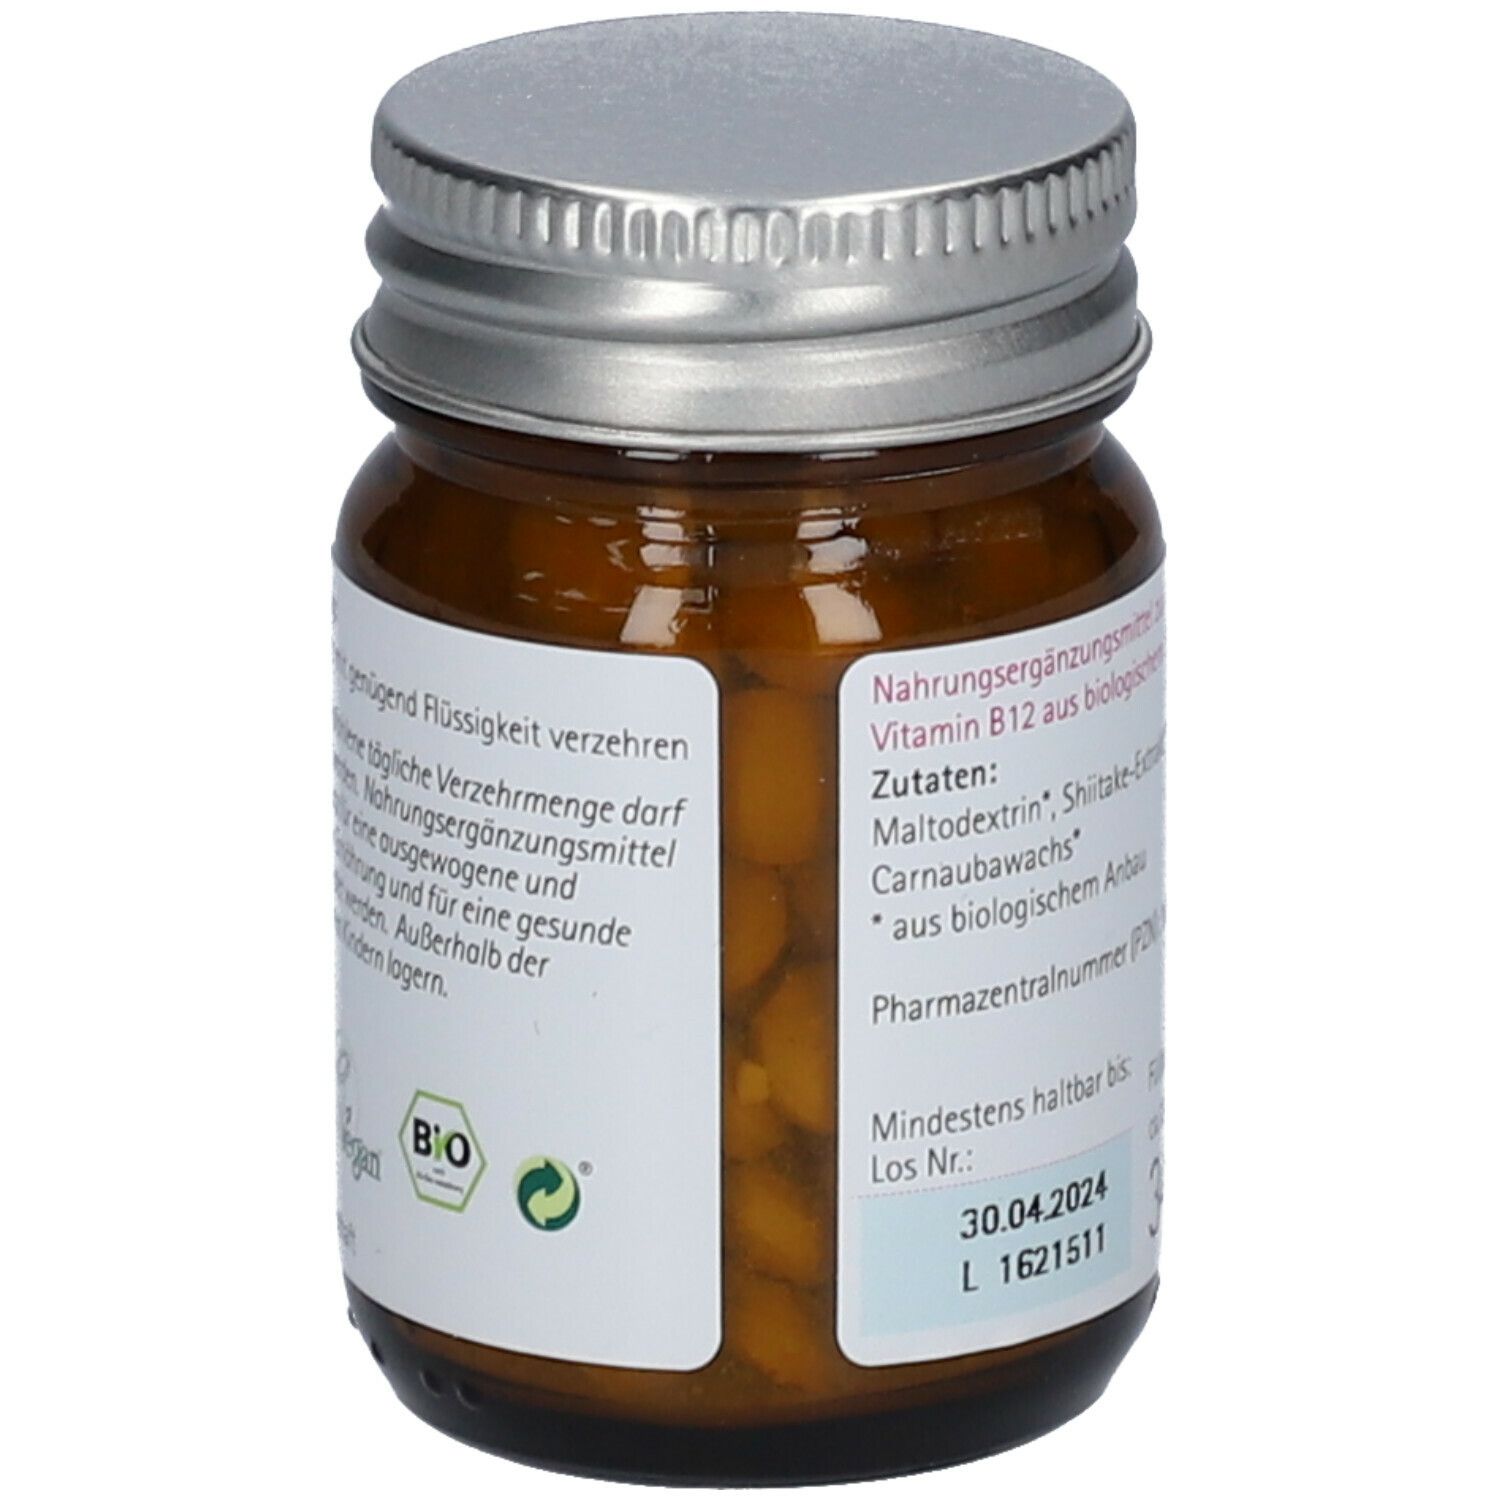 GSE vitamine B12 compacte